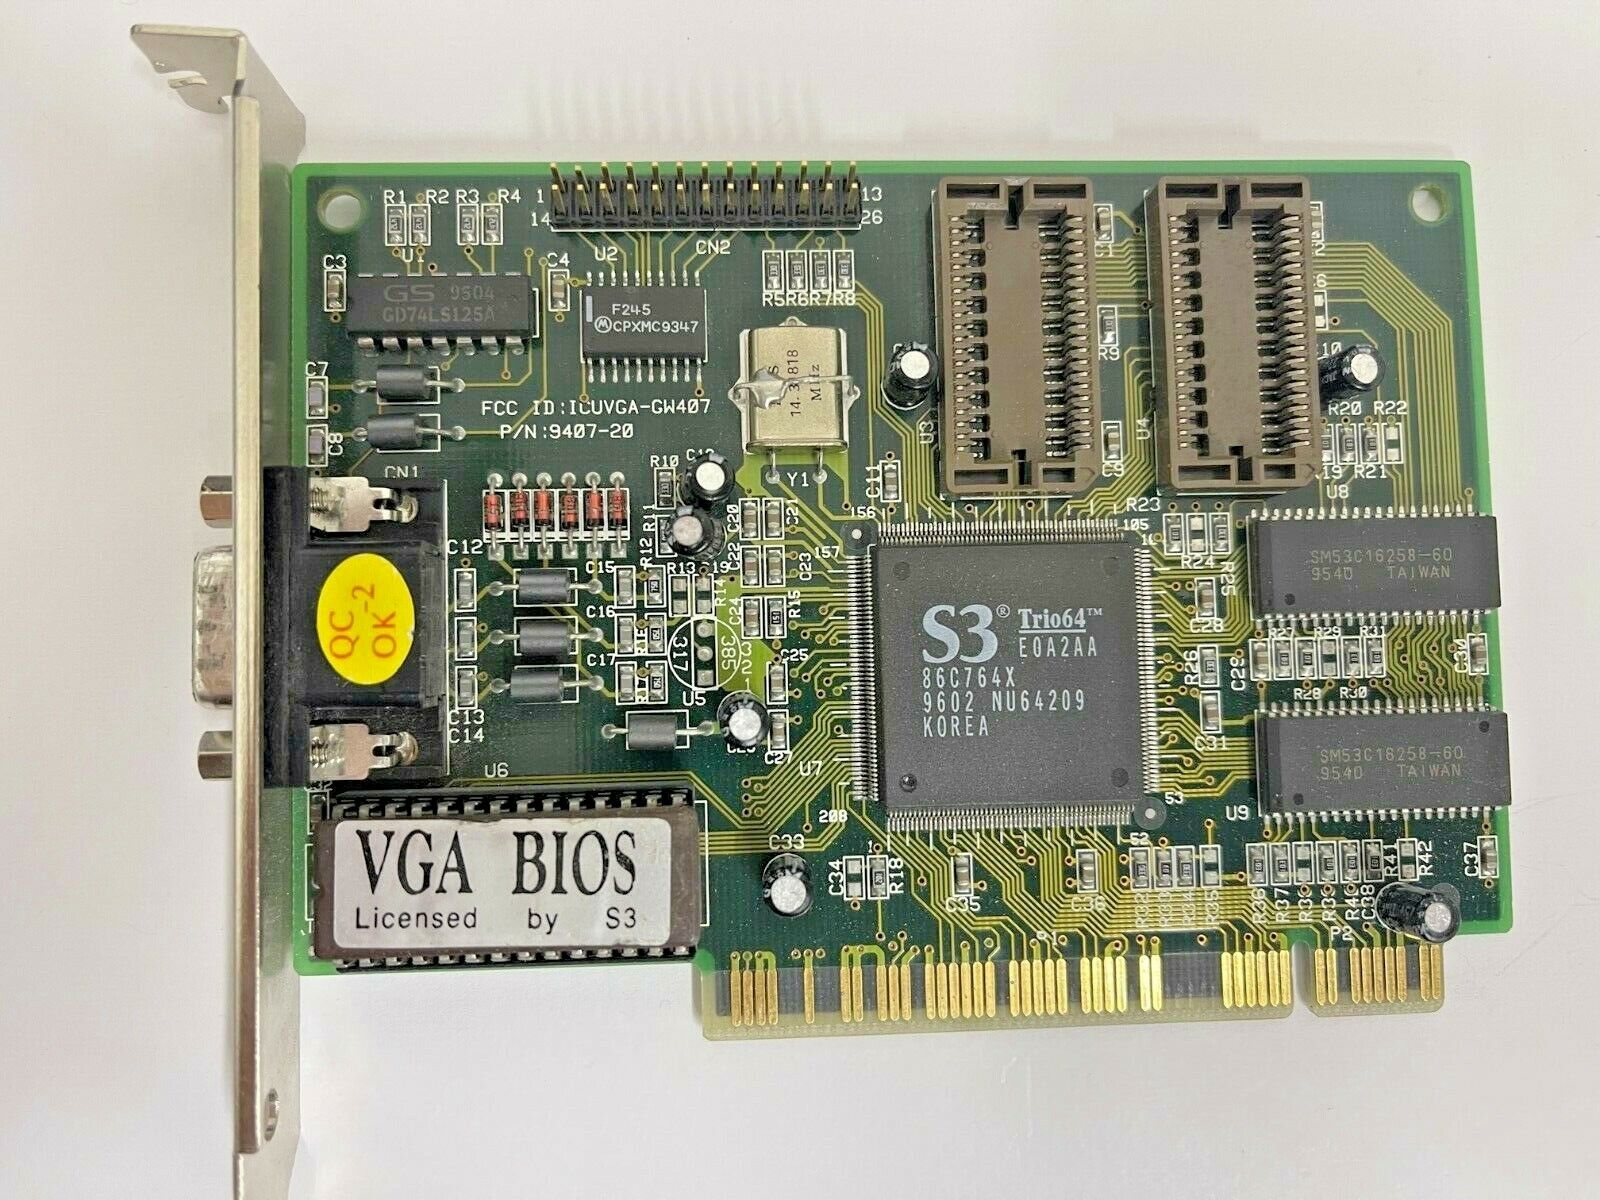 RARE VINTAGE S3 TRIO64 1 MB EXP 2 MB PCI VGA CARD FCC ICUVGA-GW407 MXB32